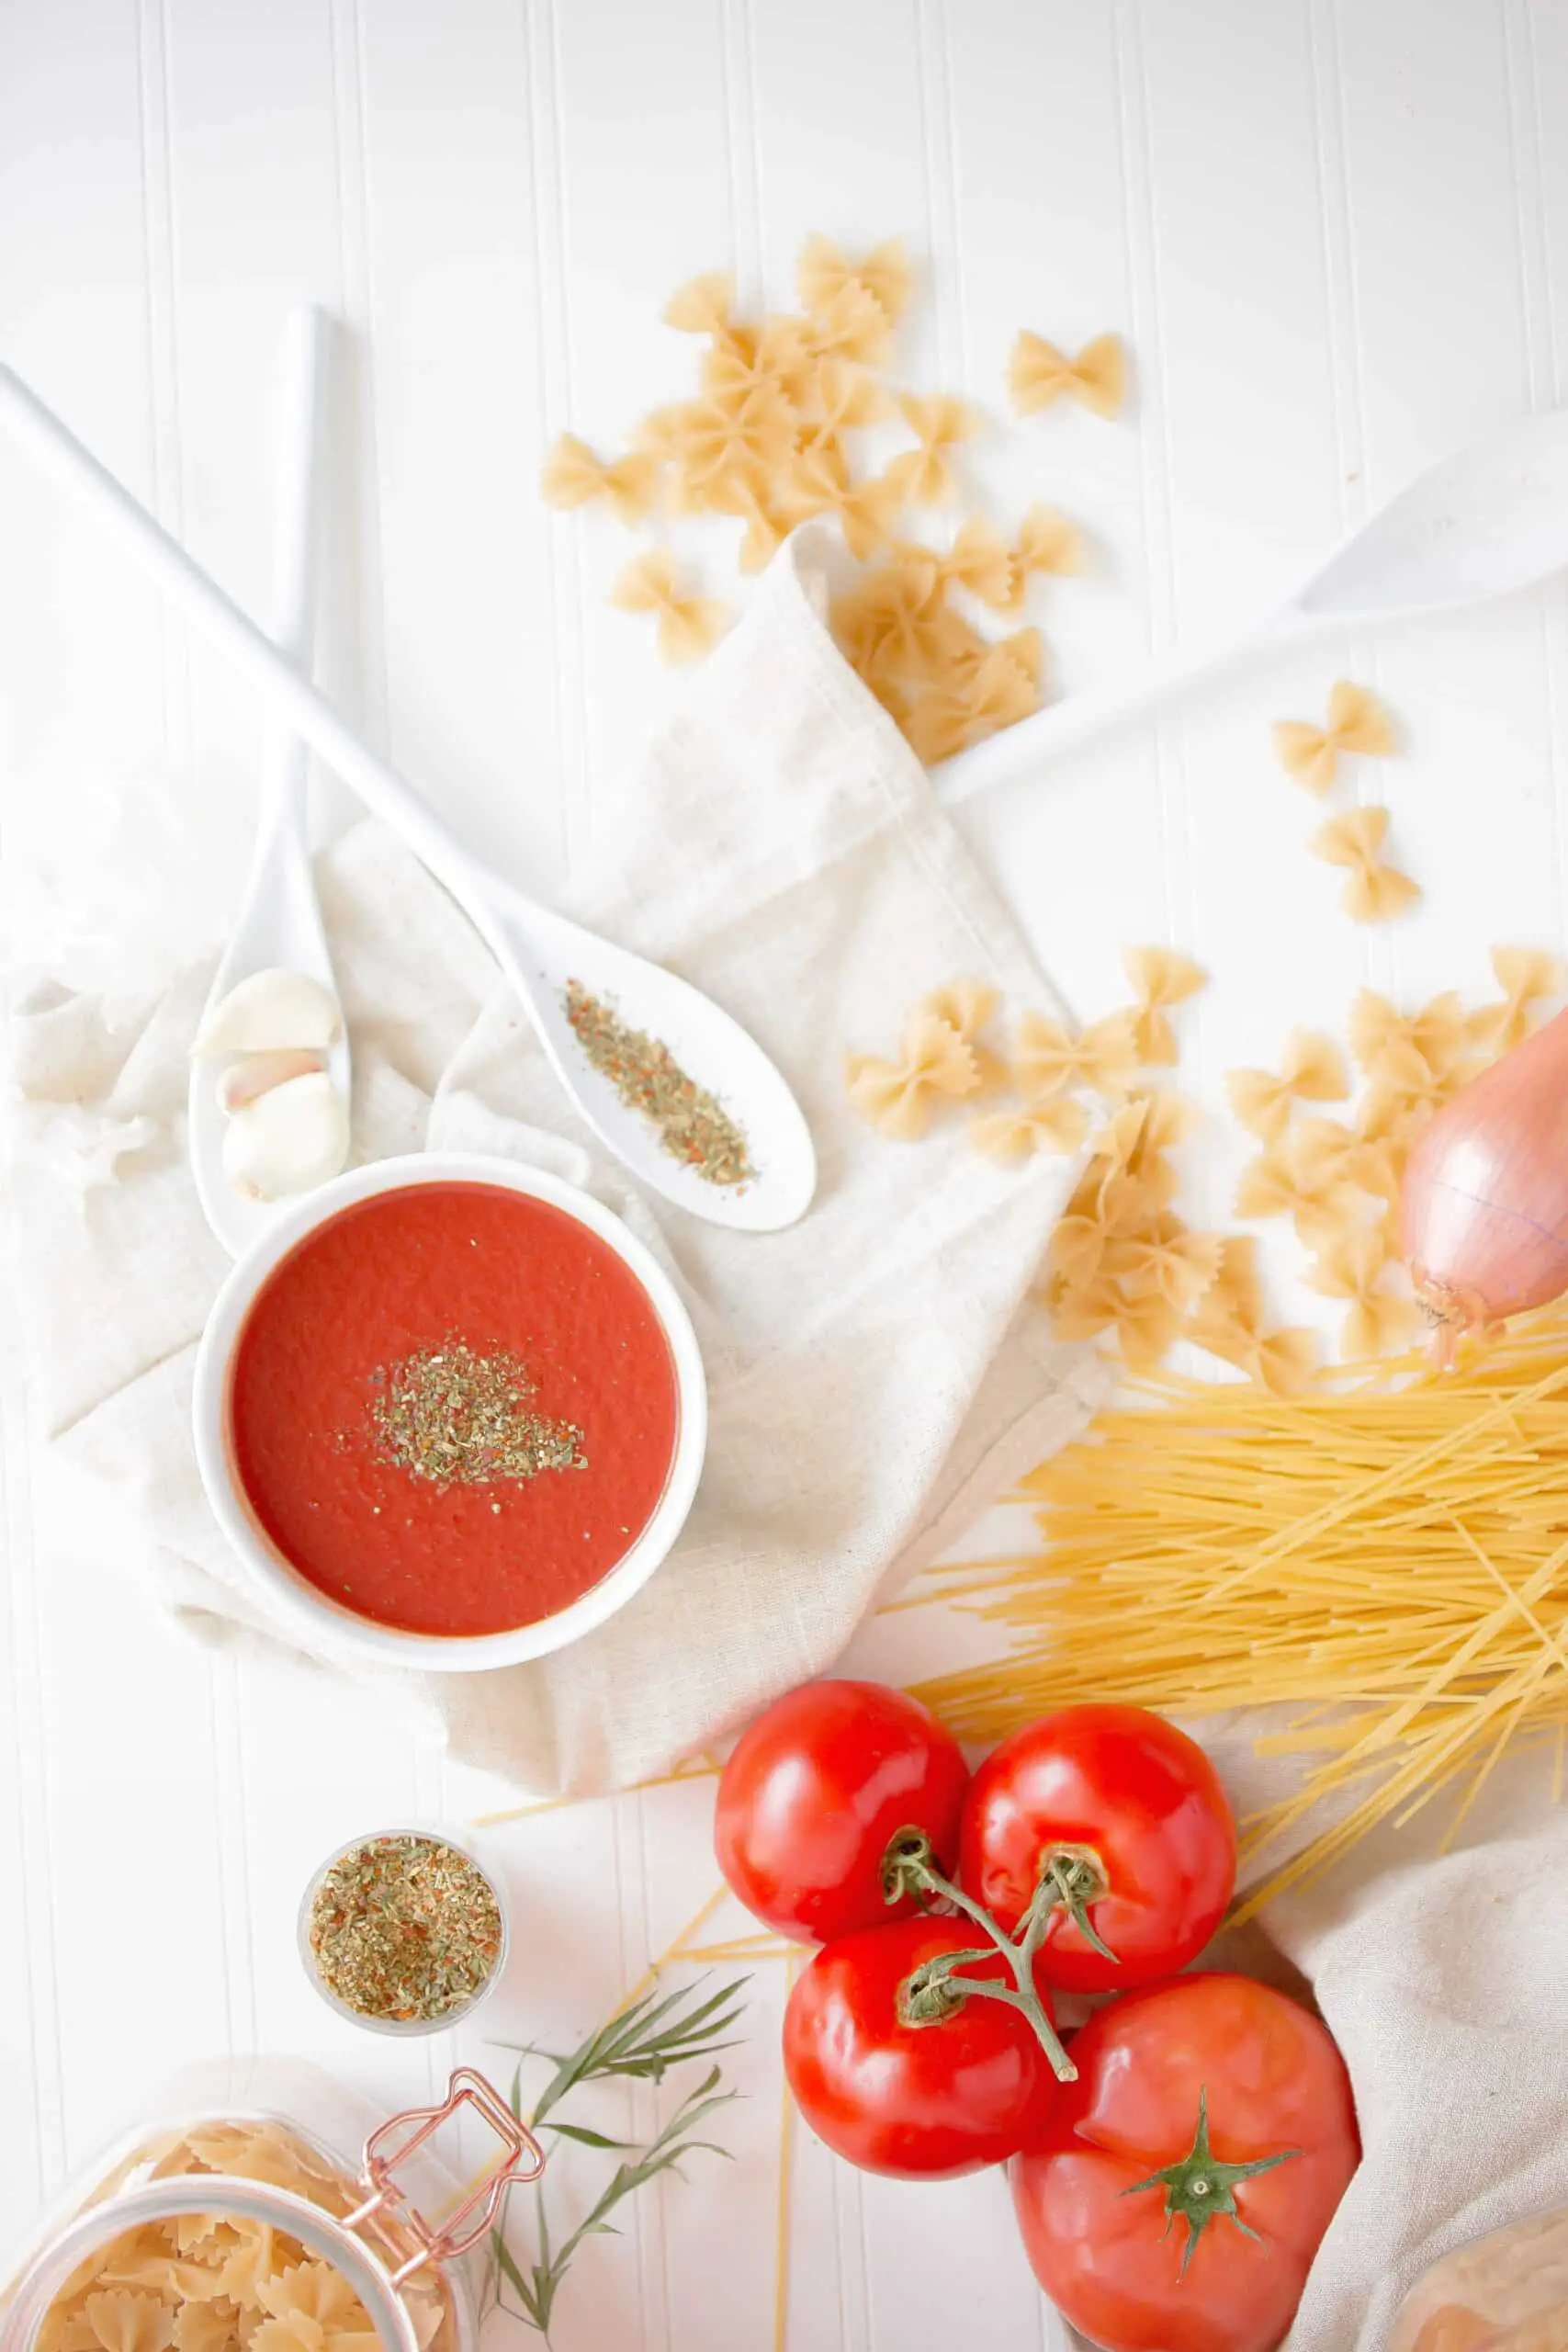 Making Deli-Style Tomato Soup At Home